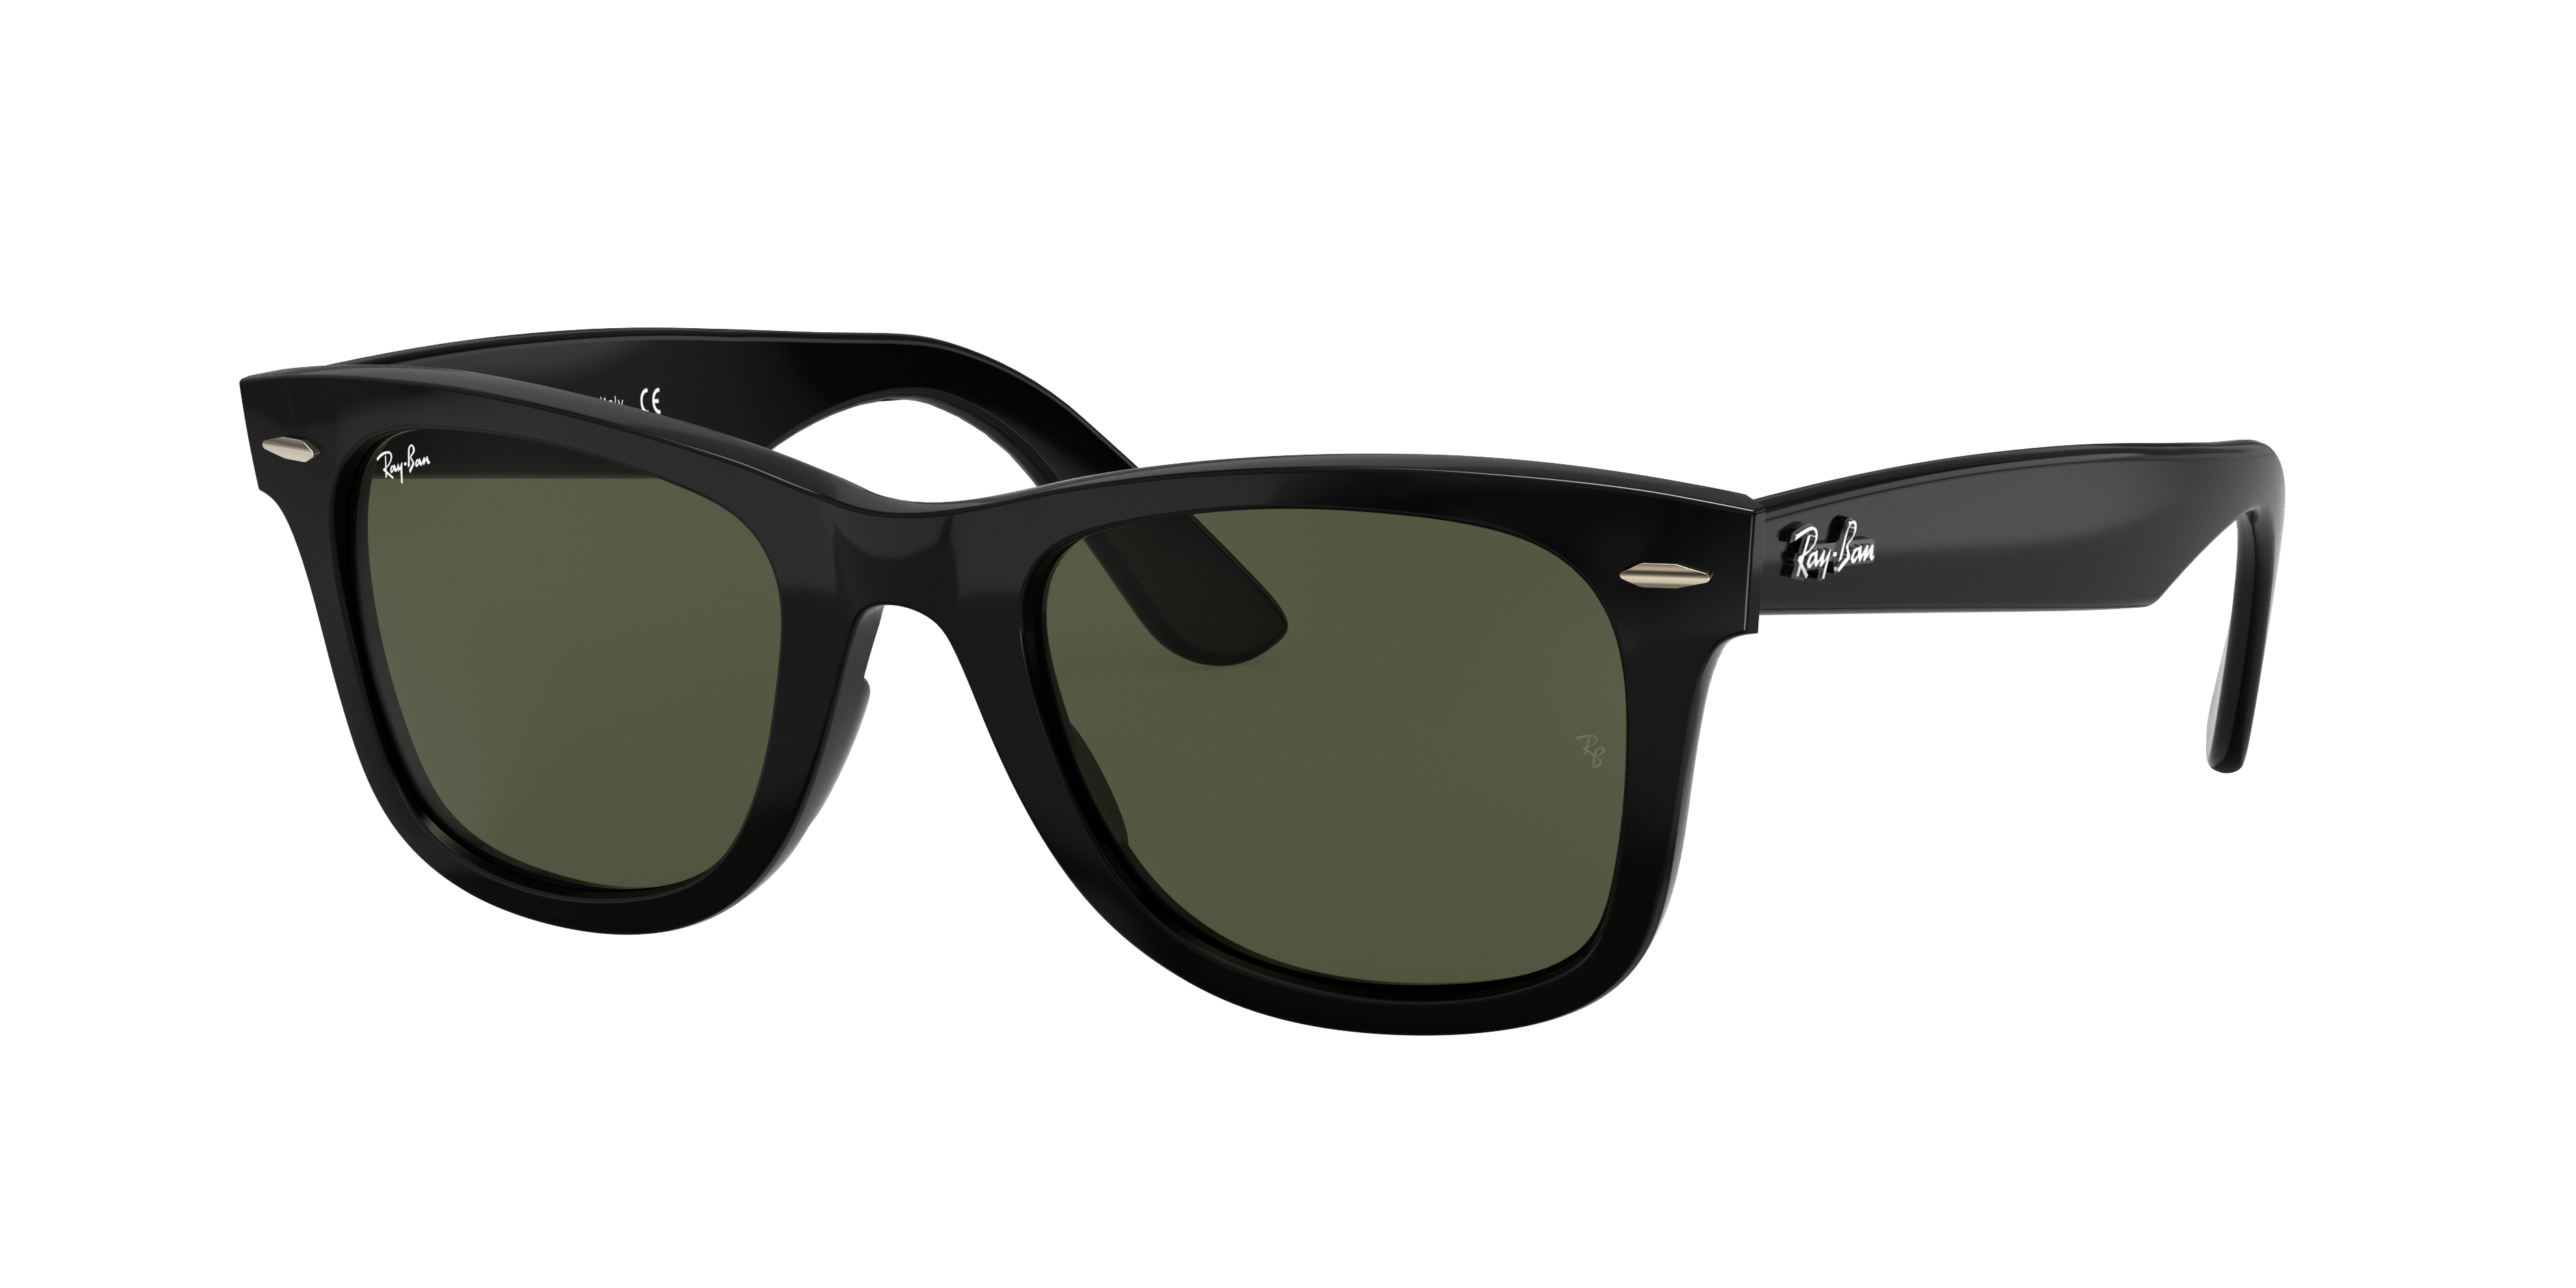 Wayfarer Ease Sunglasses in Black and Green | Ray-Ban®